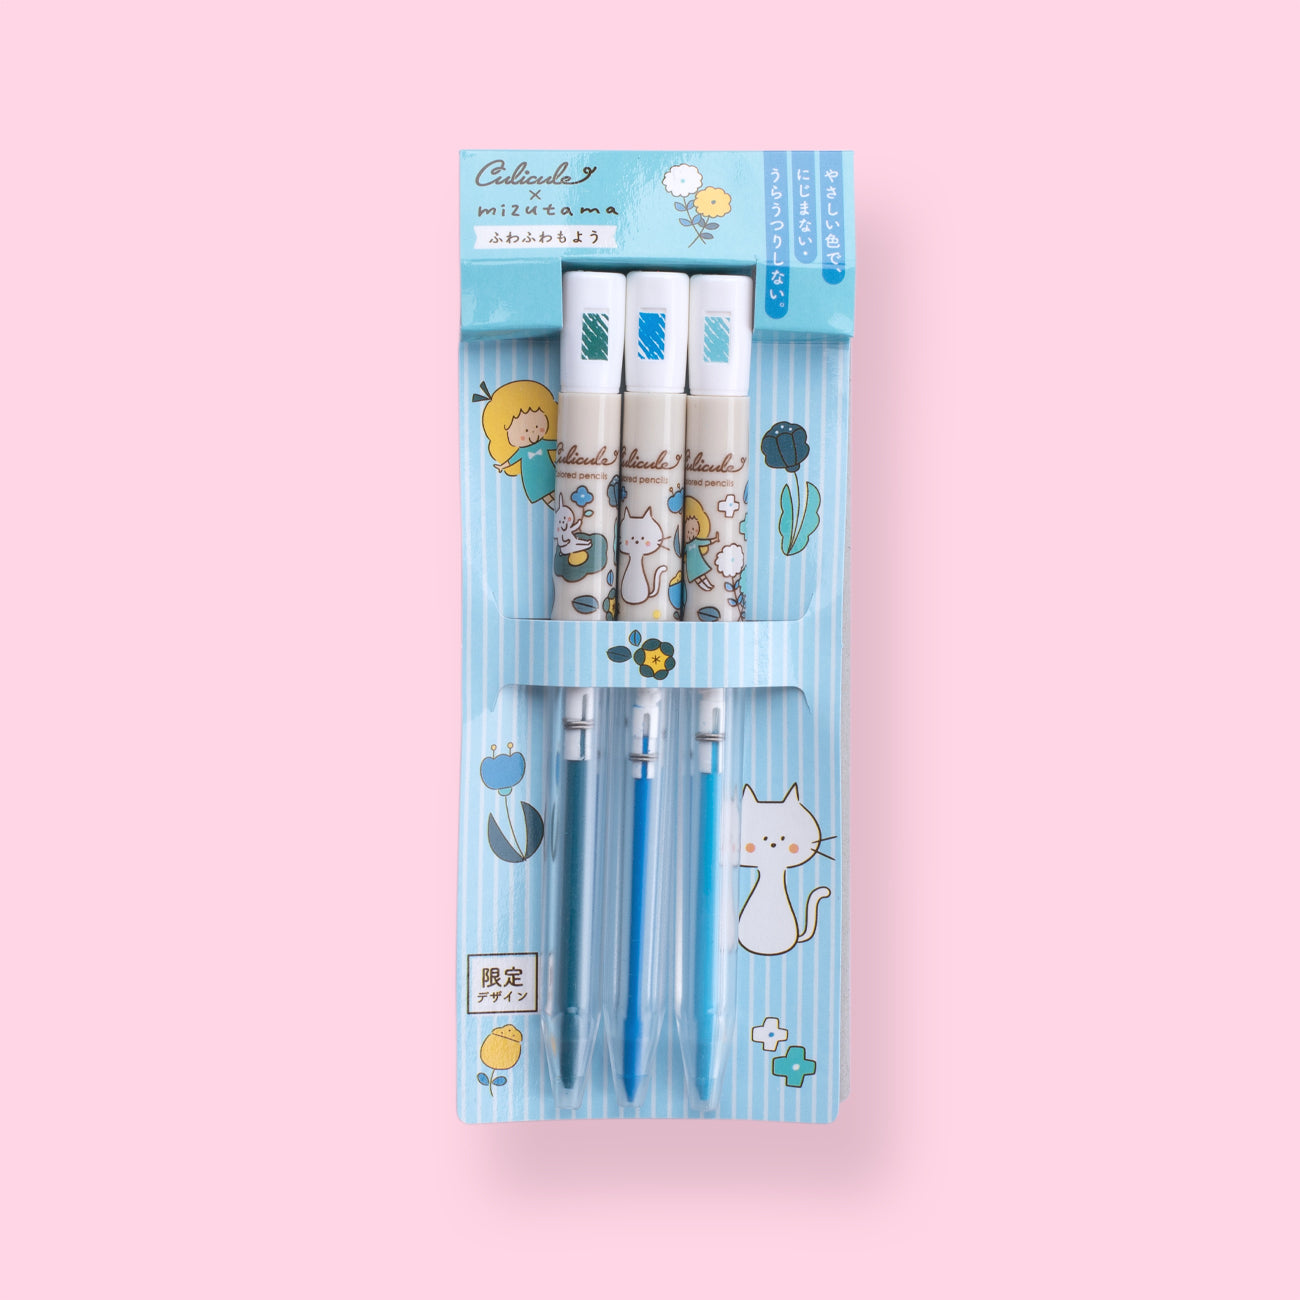 Kutsuwa Culicule x Mizutama Colored Pencils Limited Edition - Blue Cat - 3 Color Set